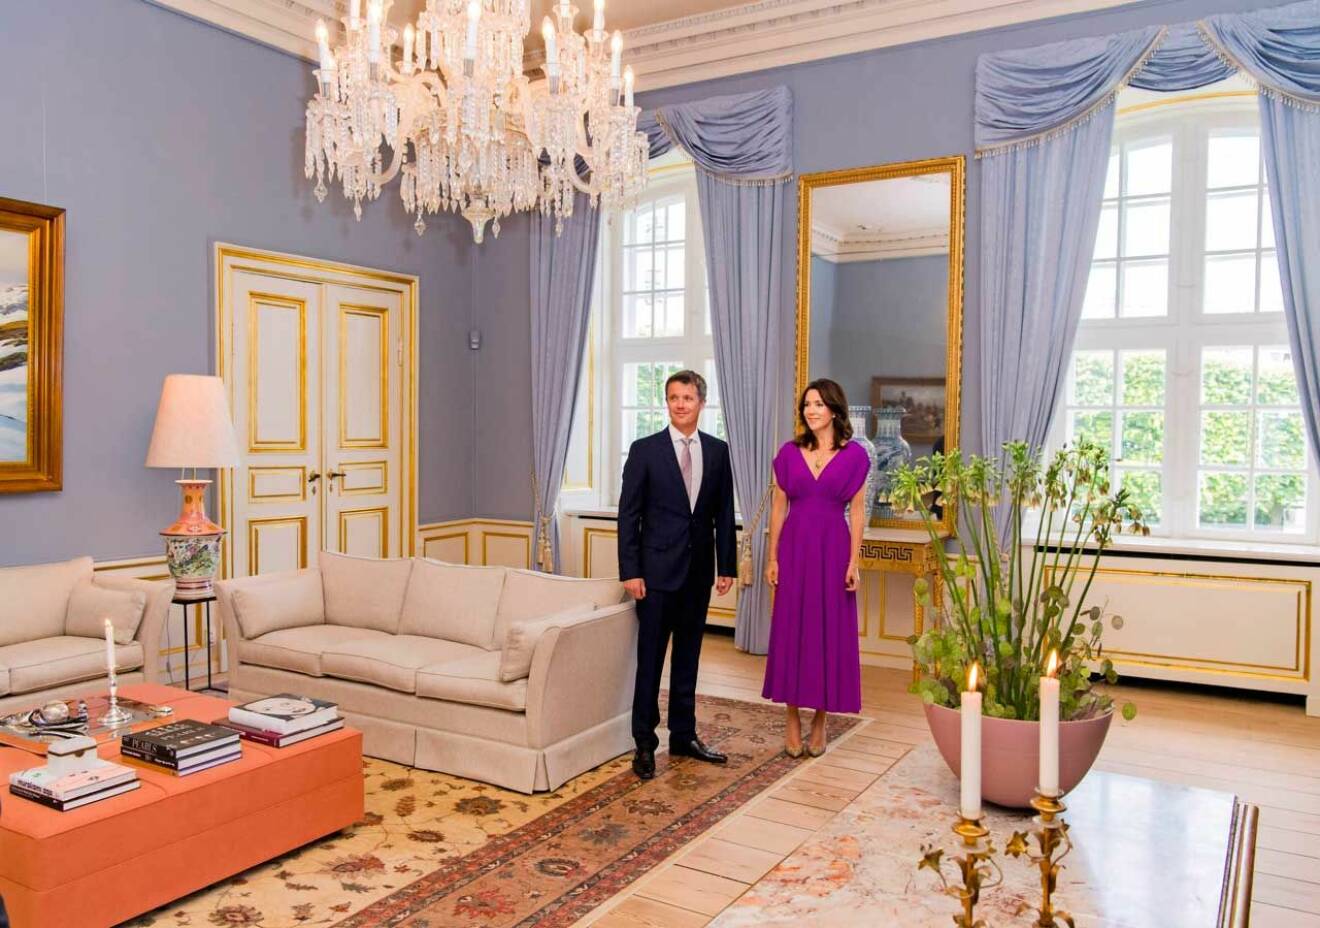 MAry och Frederik i vardagsrummet på Amalienborg.